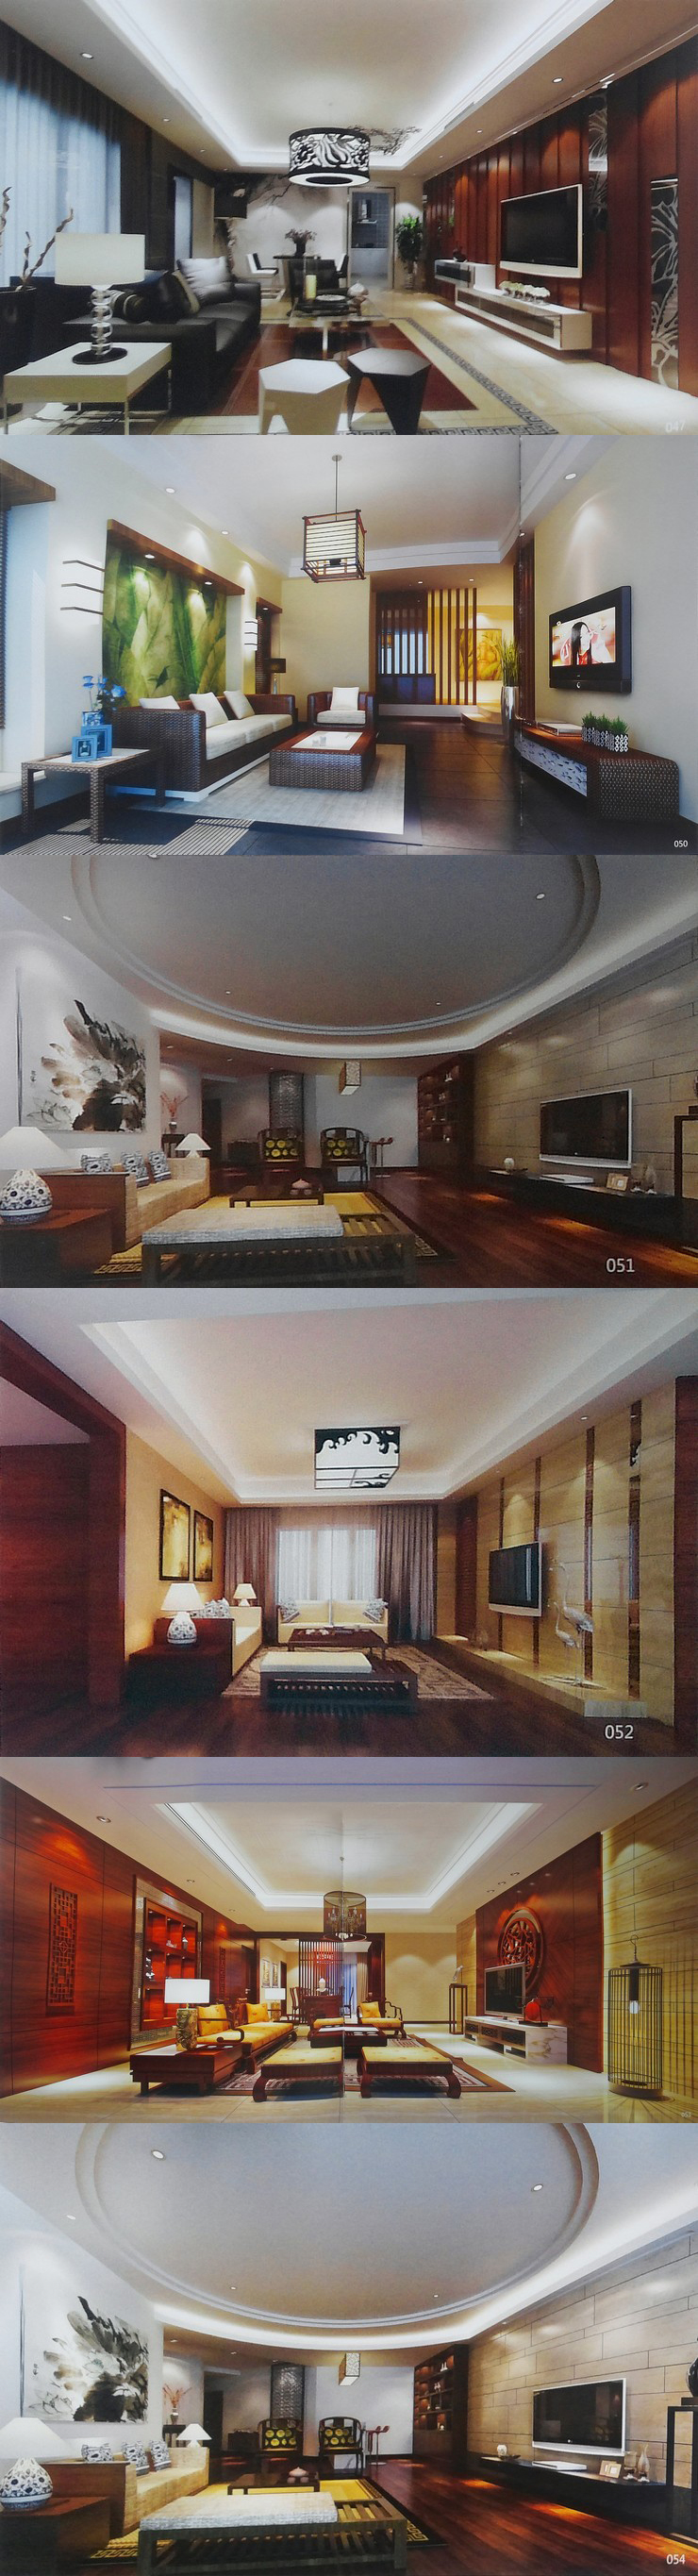 Living-room interior design 3ds max model 2014